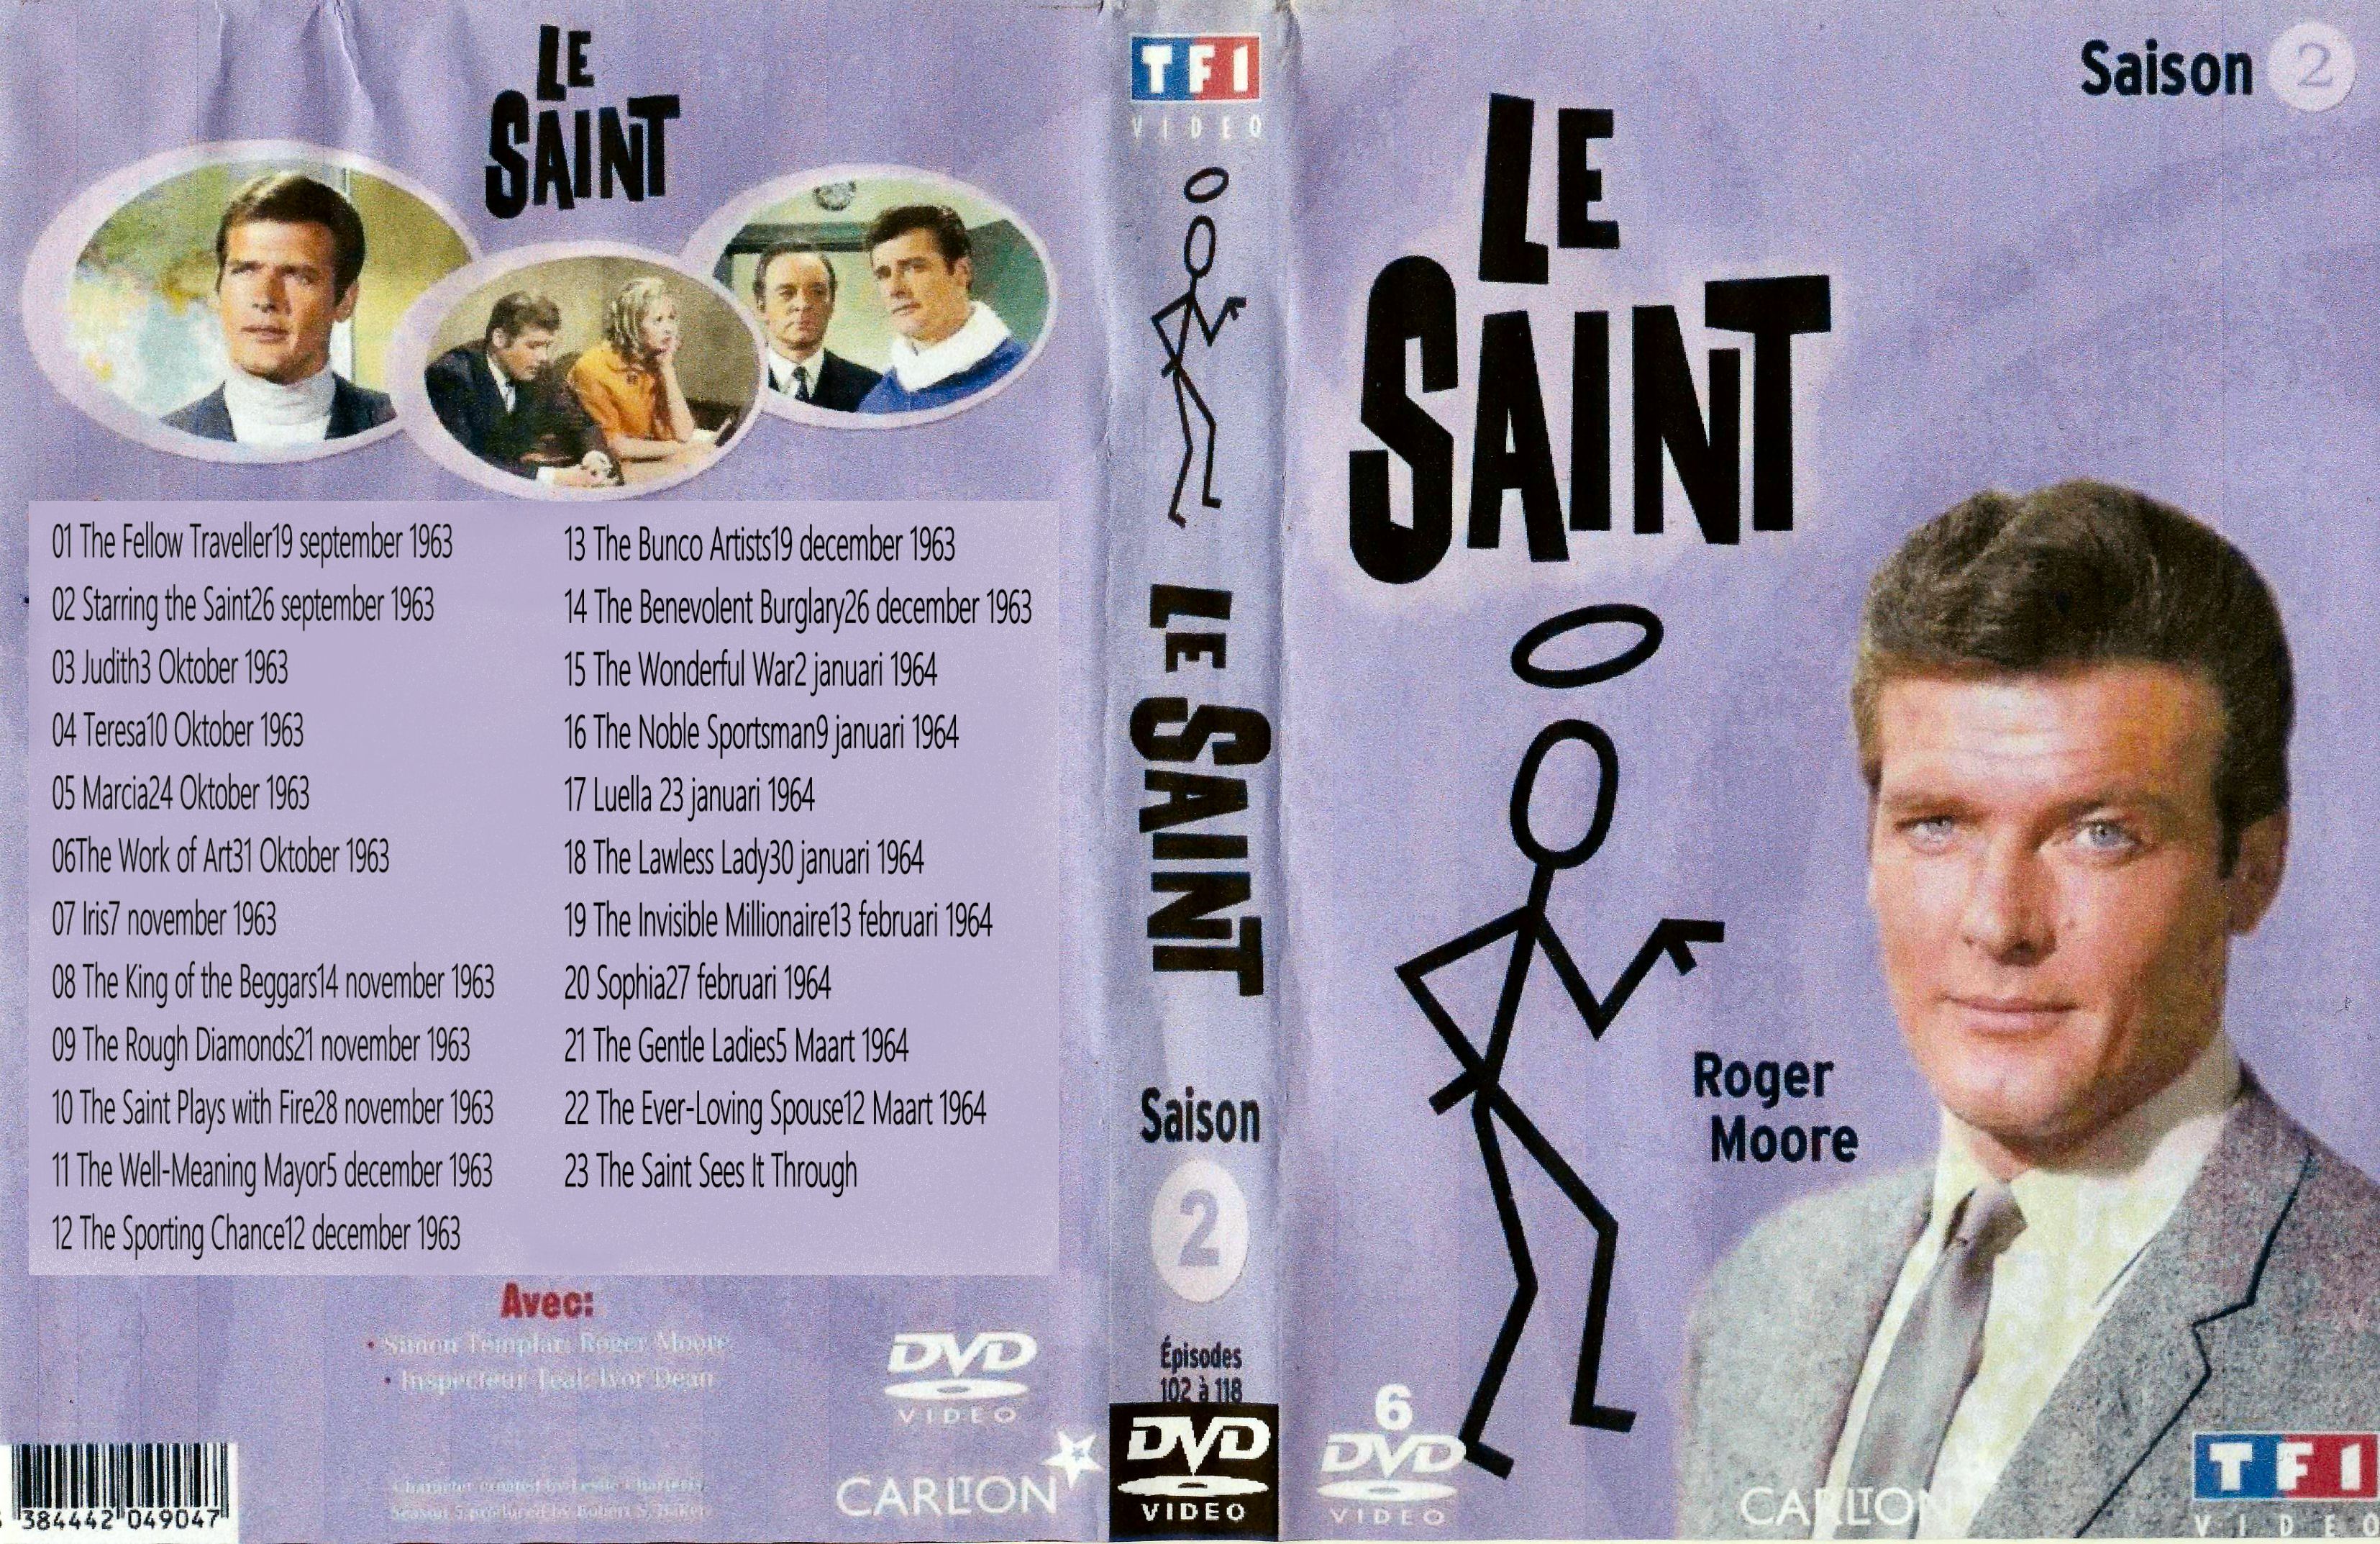 REPOST The Saint Seizoen 2 ( 1963 ) DvD 2